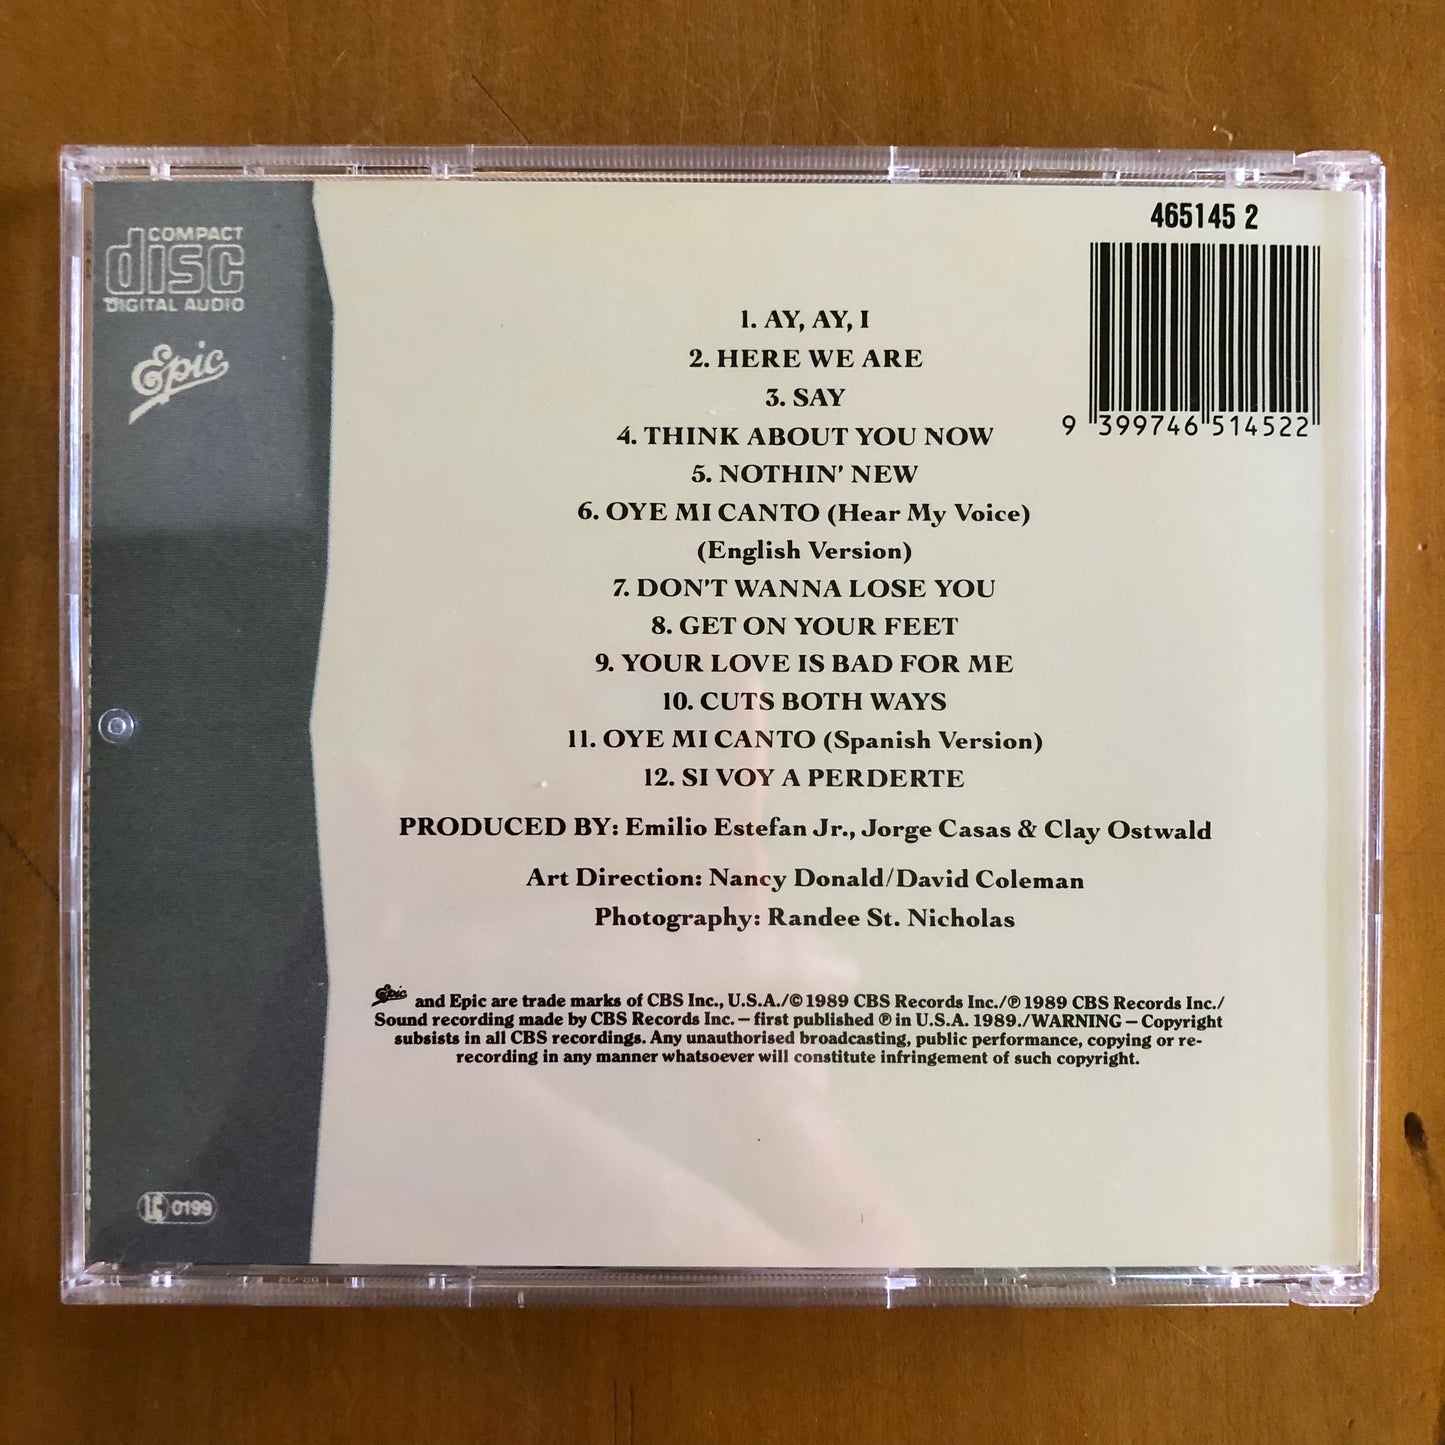 Gloria Estefan - Cuts Both Ways (CD)